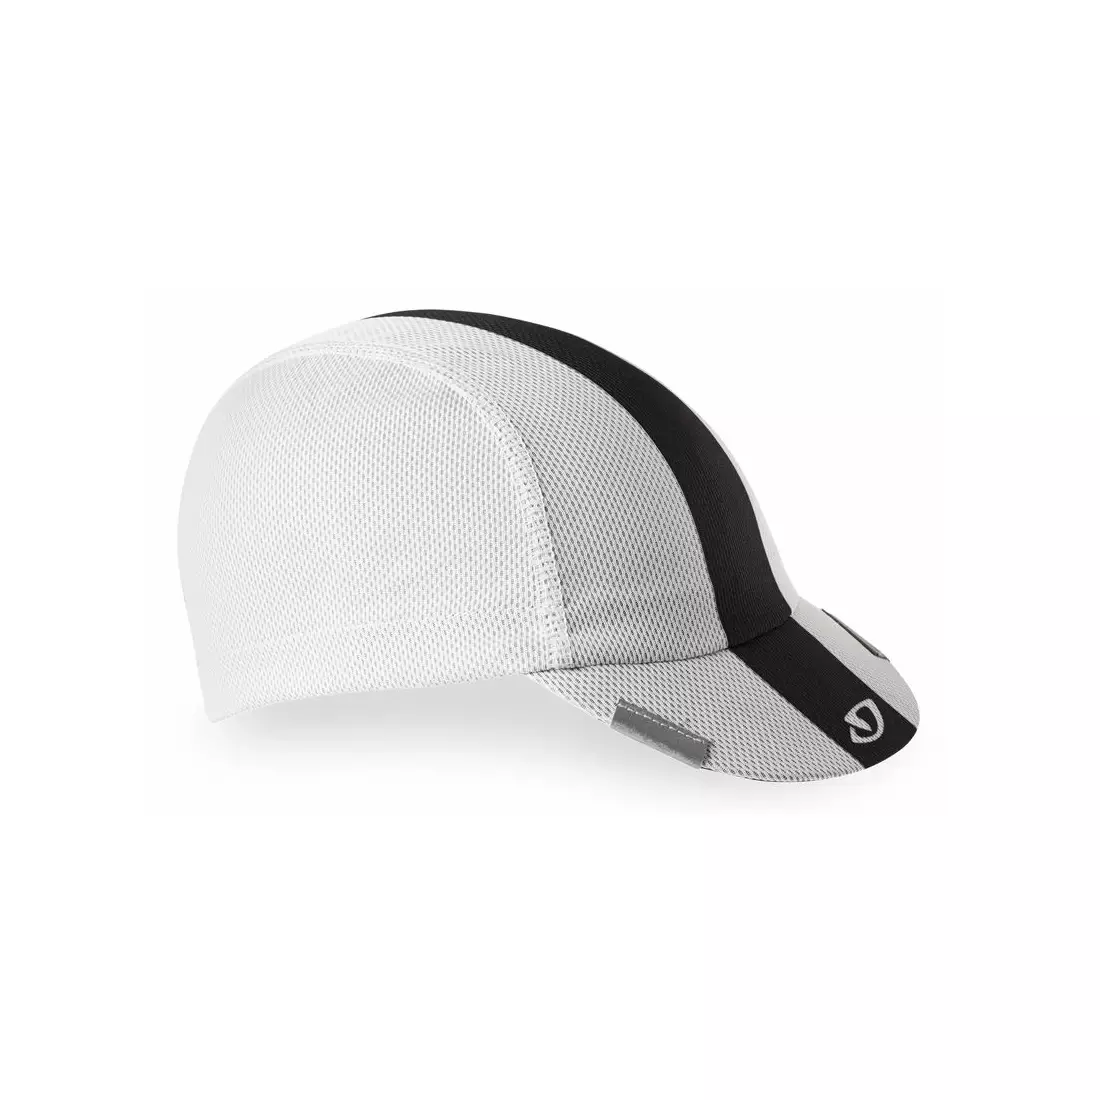 GIRO cycling cap with a visor PELOTON CAP white black grey GR-7043339